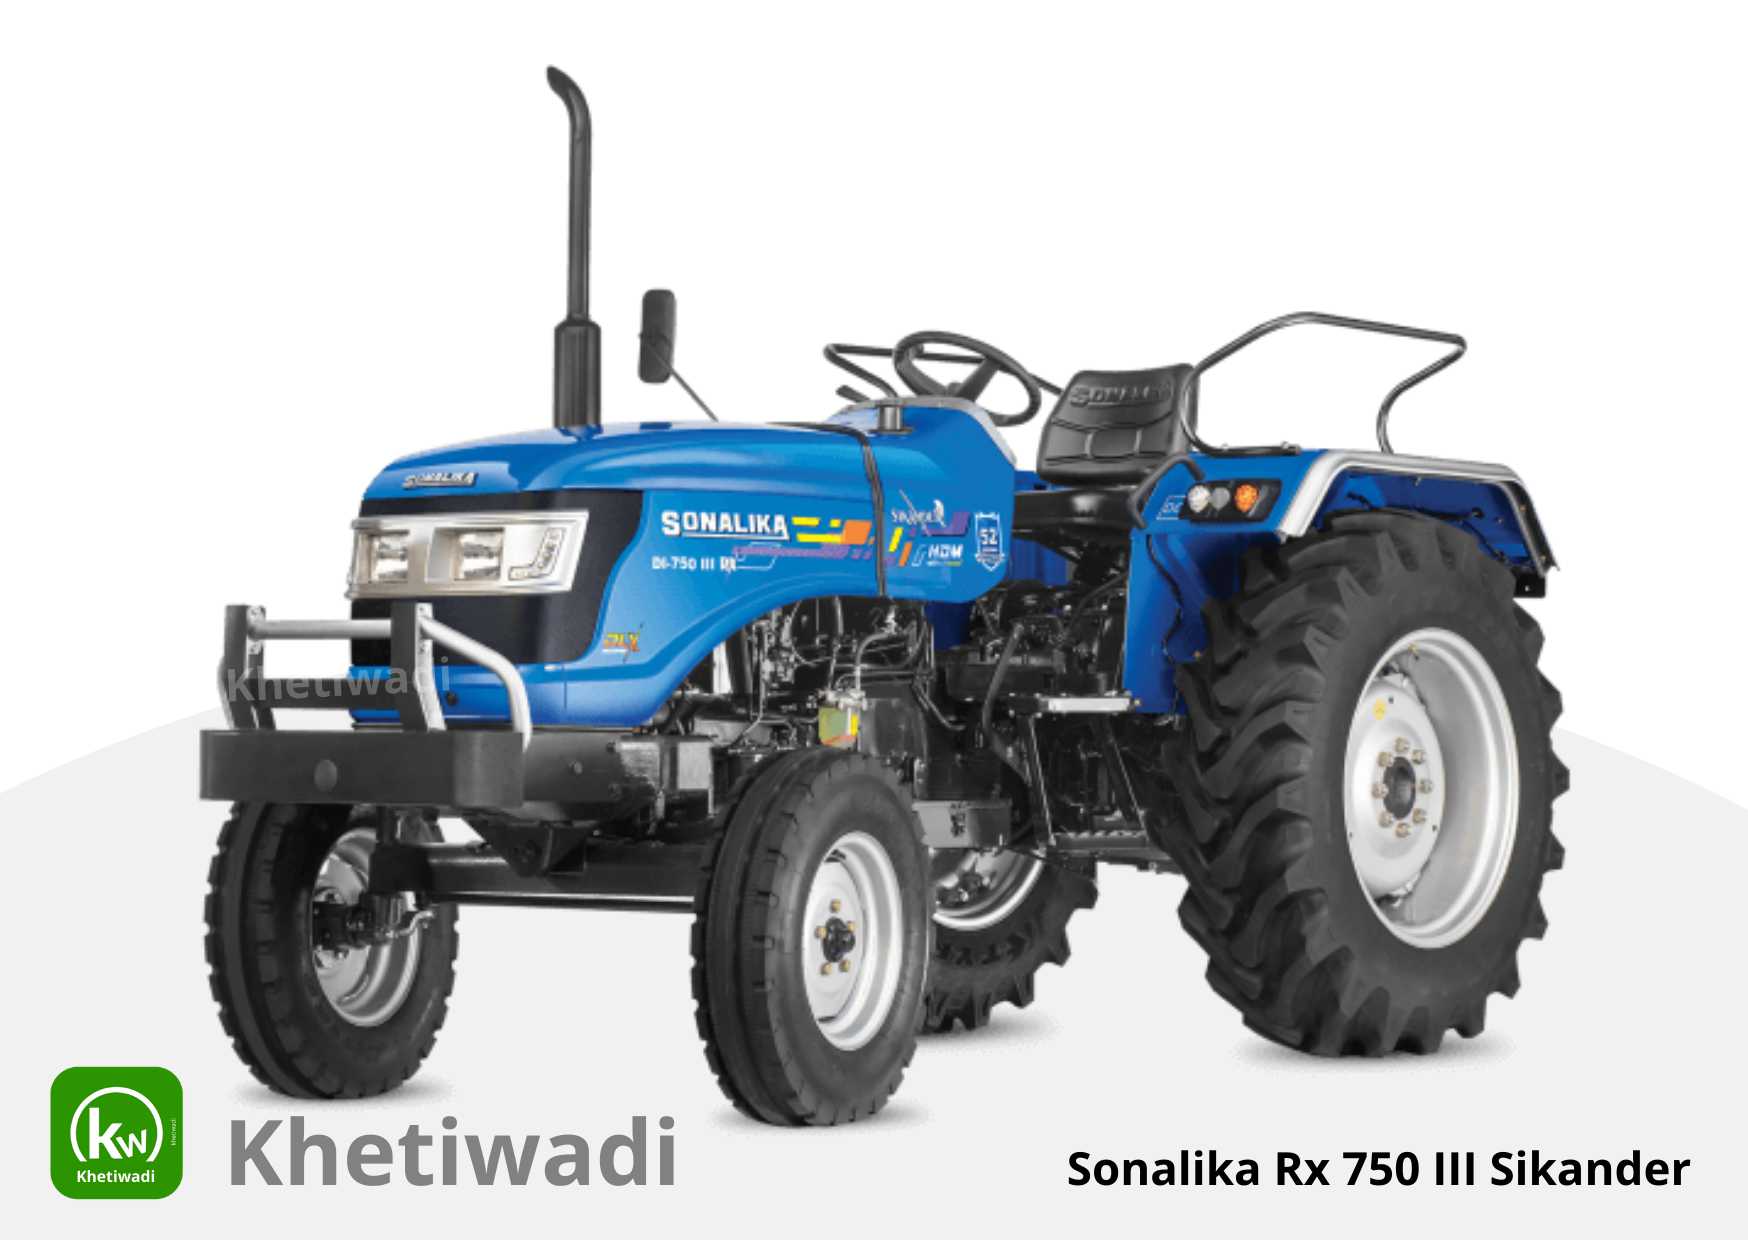 Sonalika Rx 750 III Sikander image